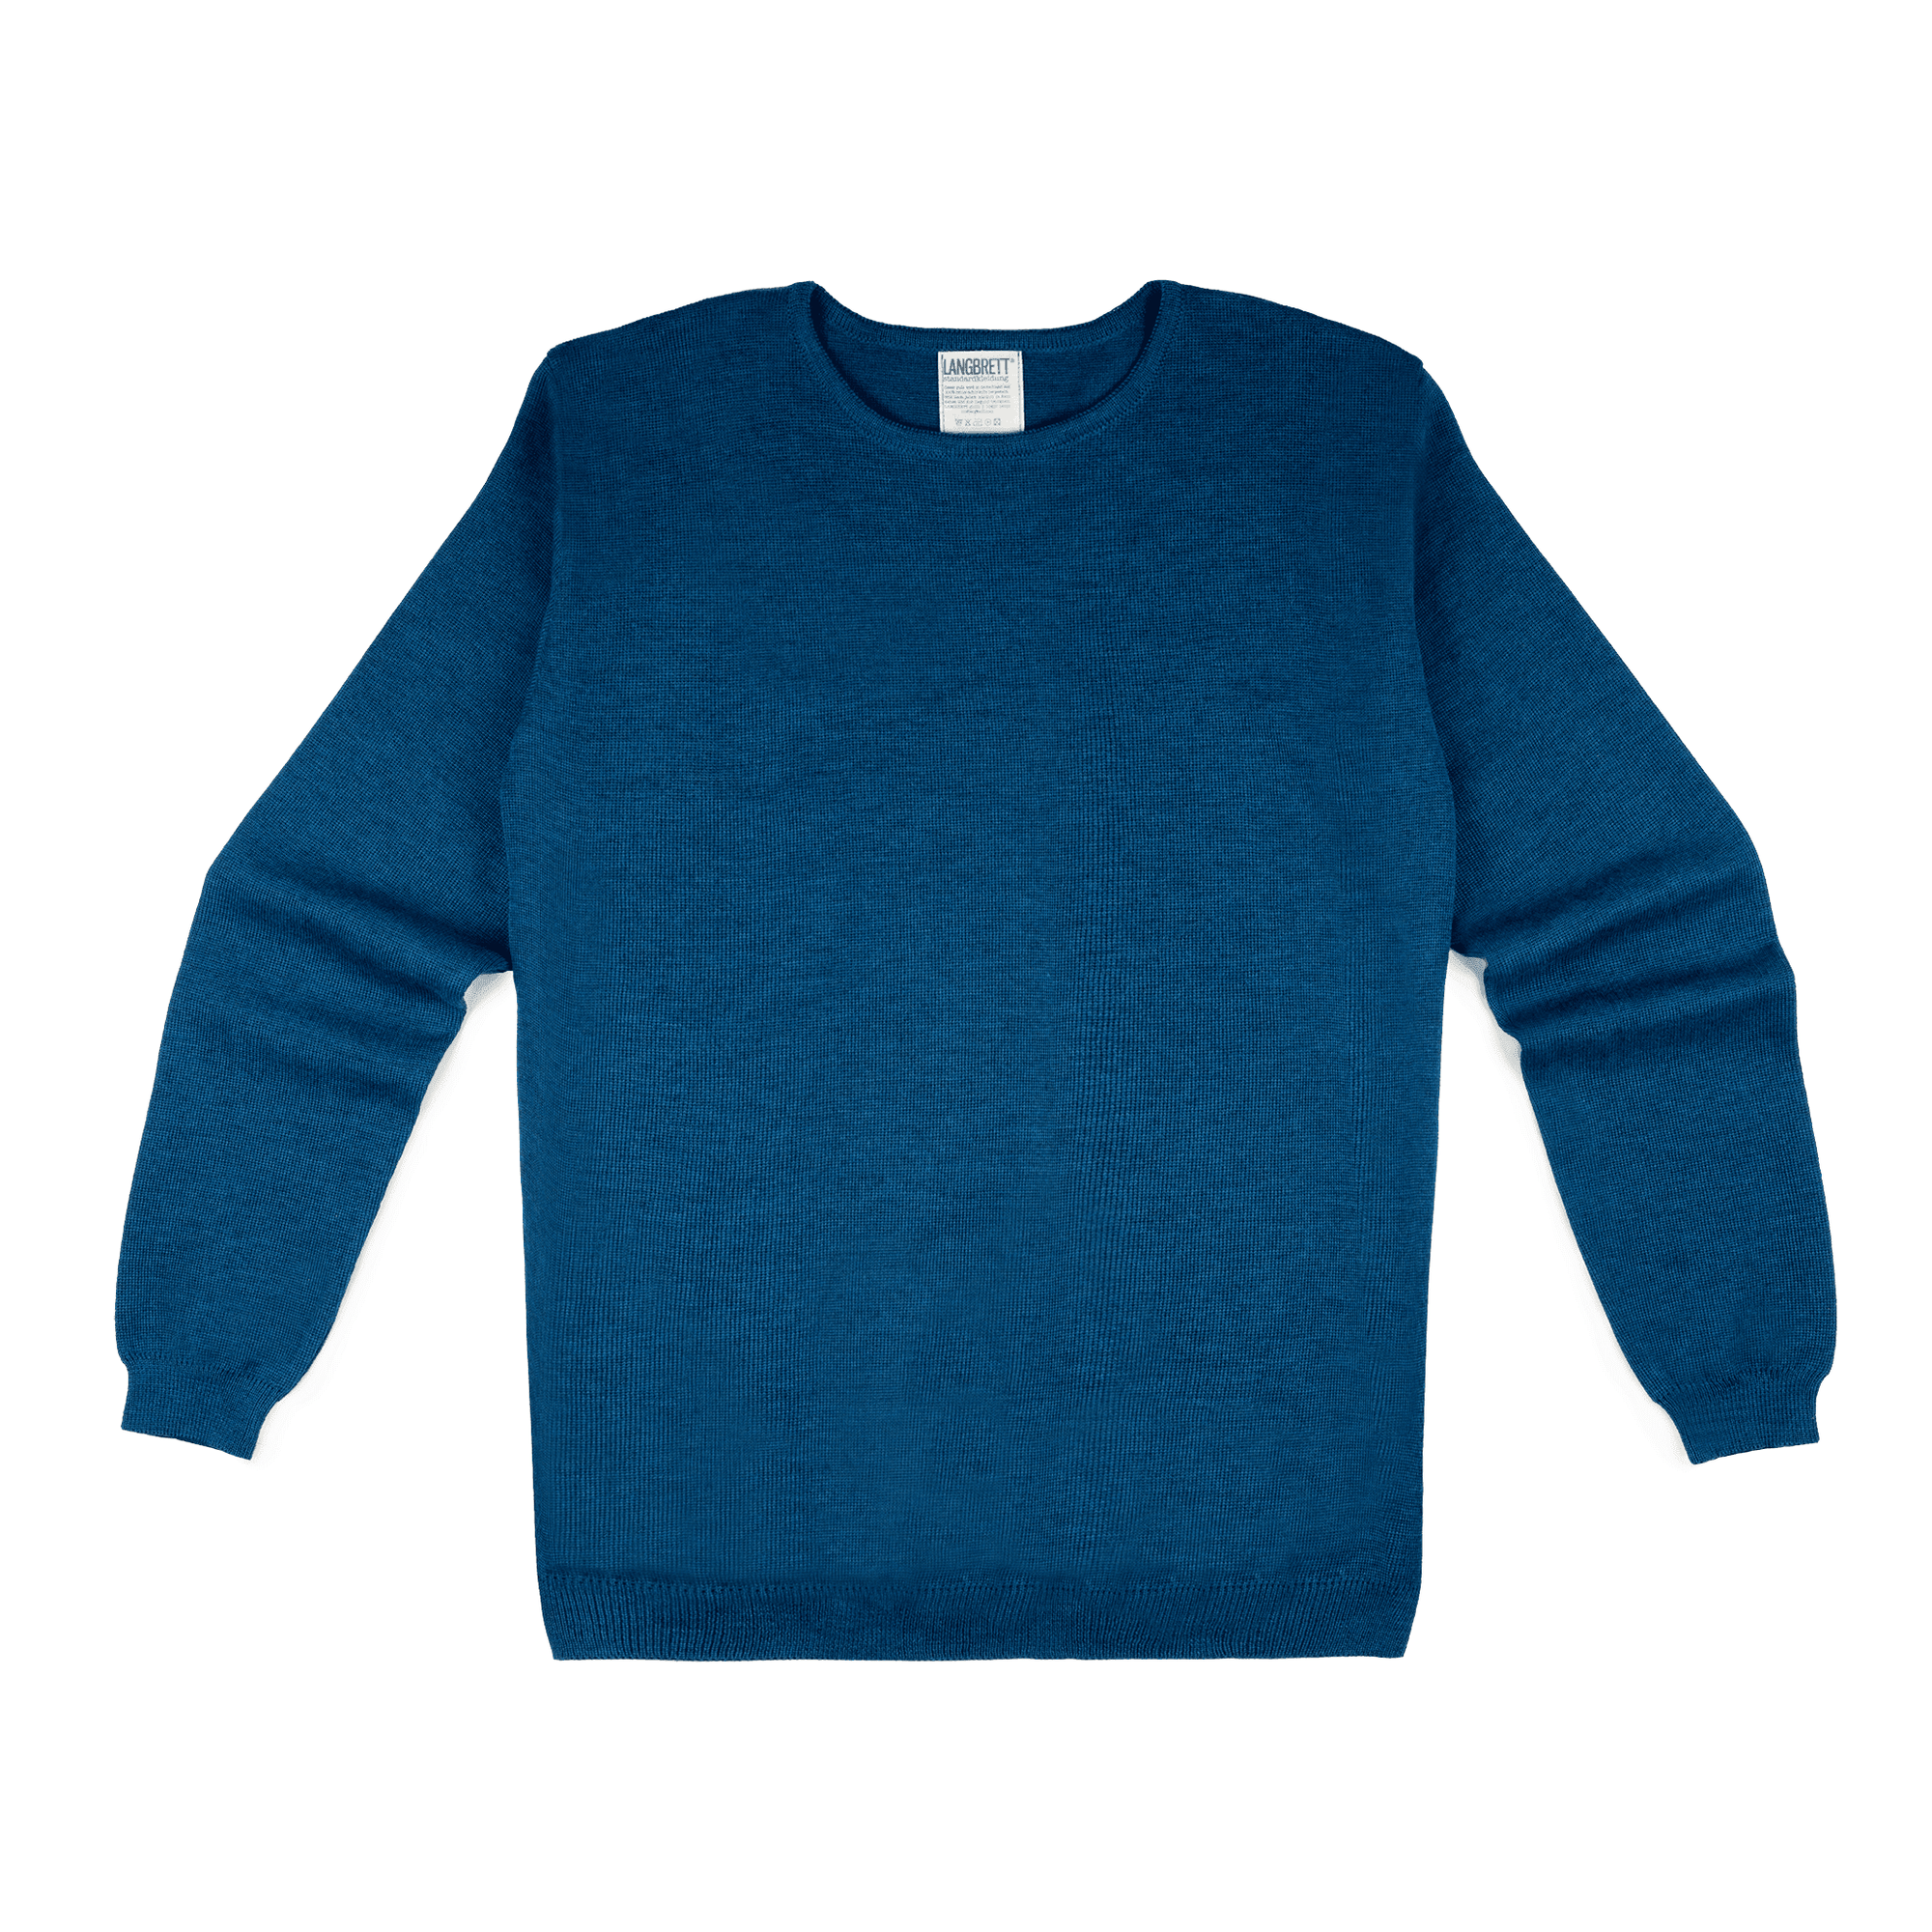 LANGBRETT pullover | merino feinstrick